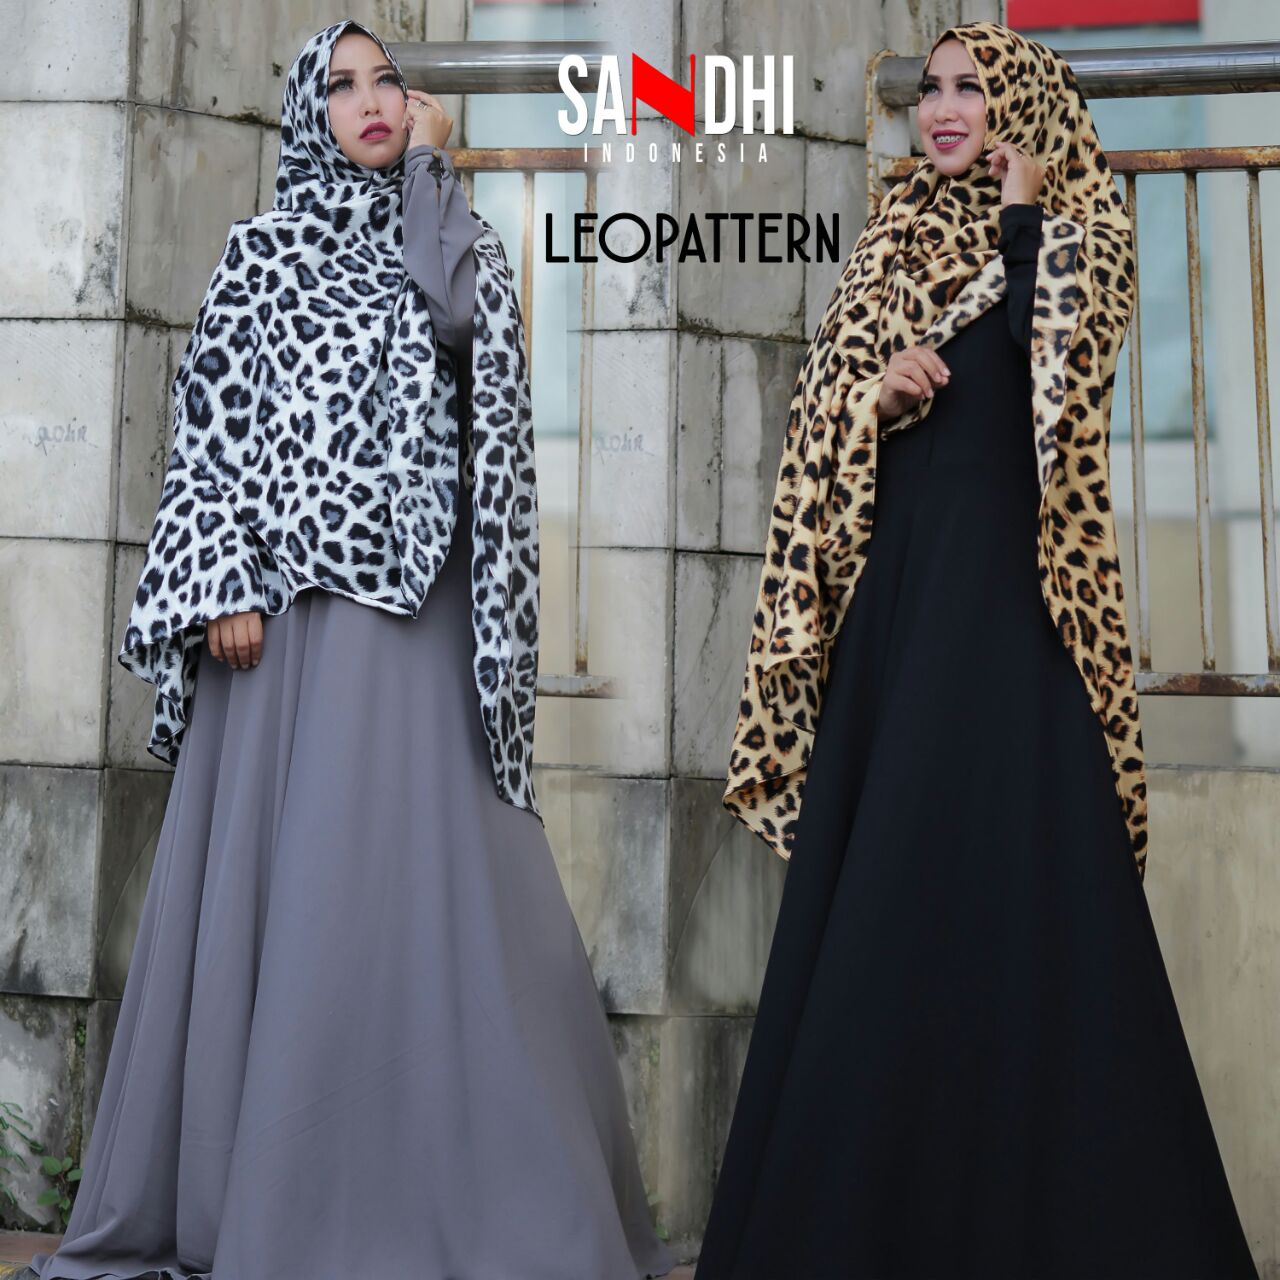  Jual Baju Hijab Artis Leopattern Syar Vol 2 By Sandhi